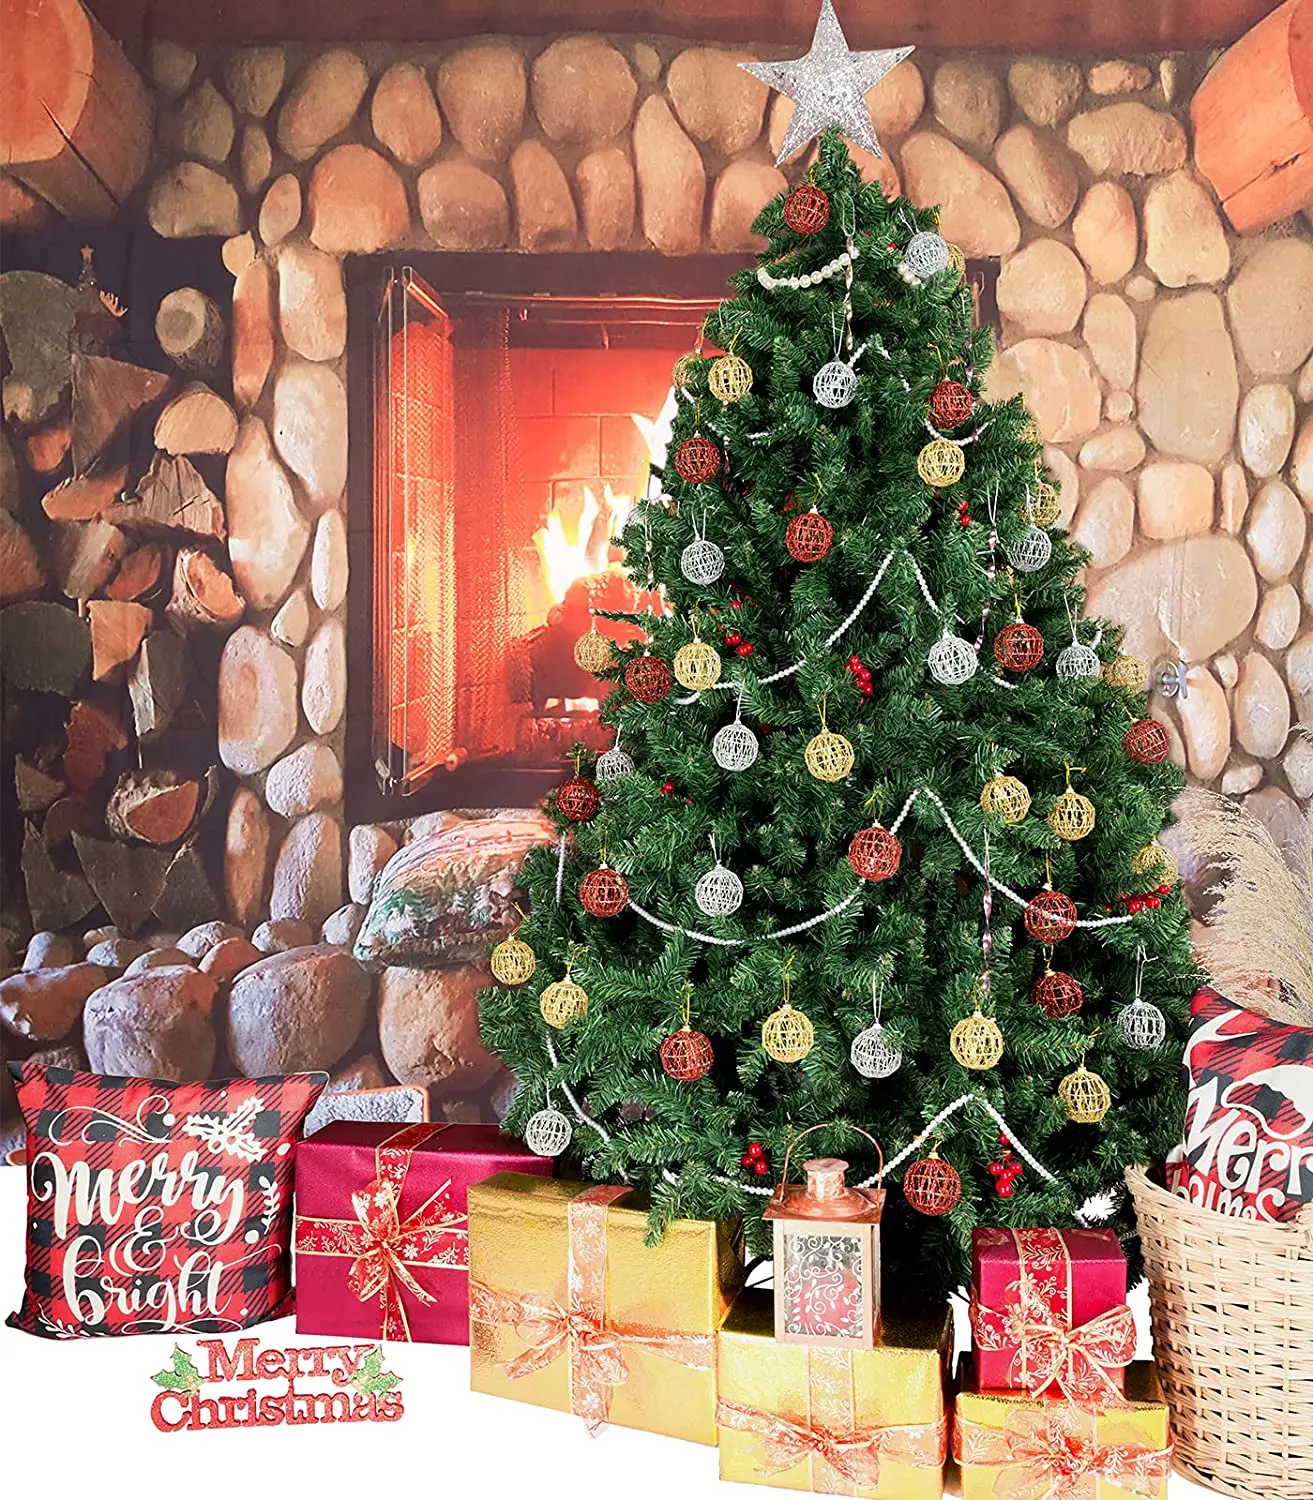 Butterfly Christmas Tree Ornaments - Home & Garden - AliExpress